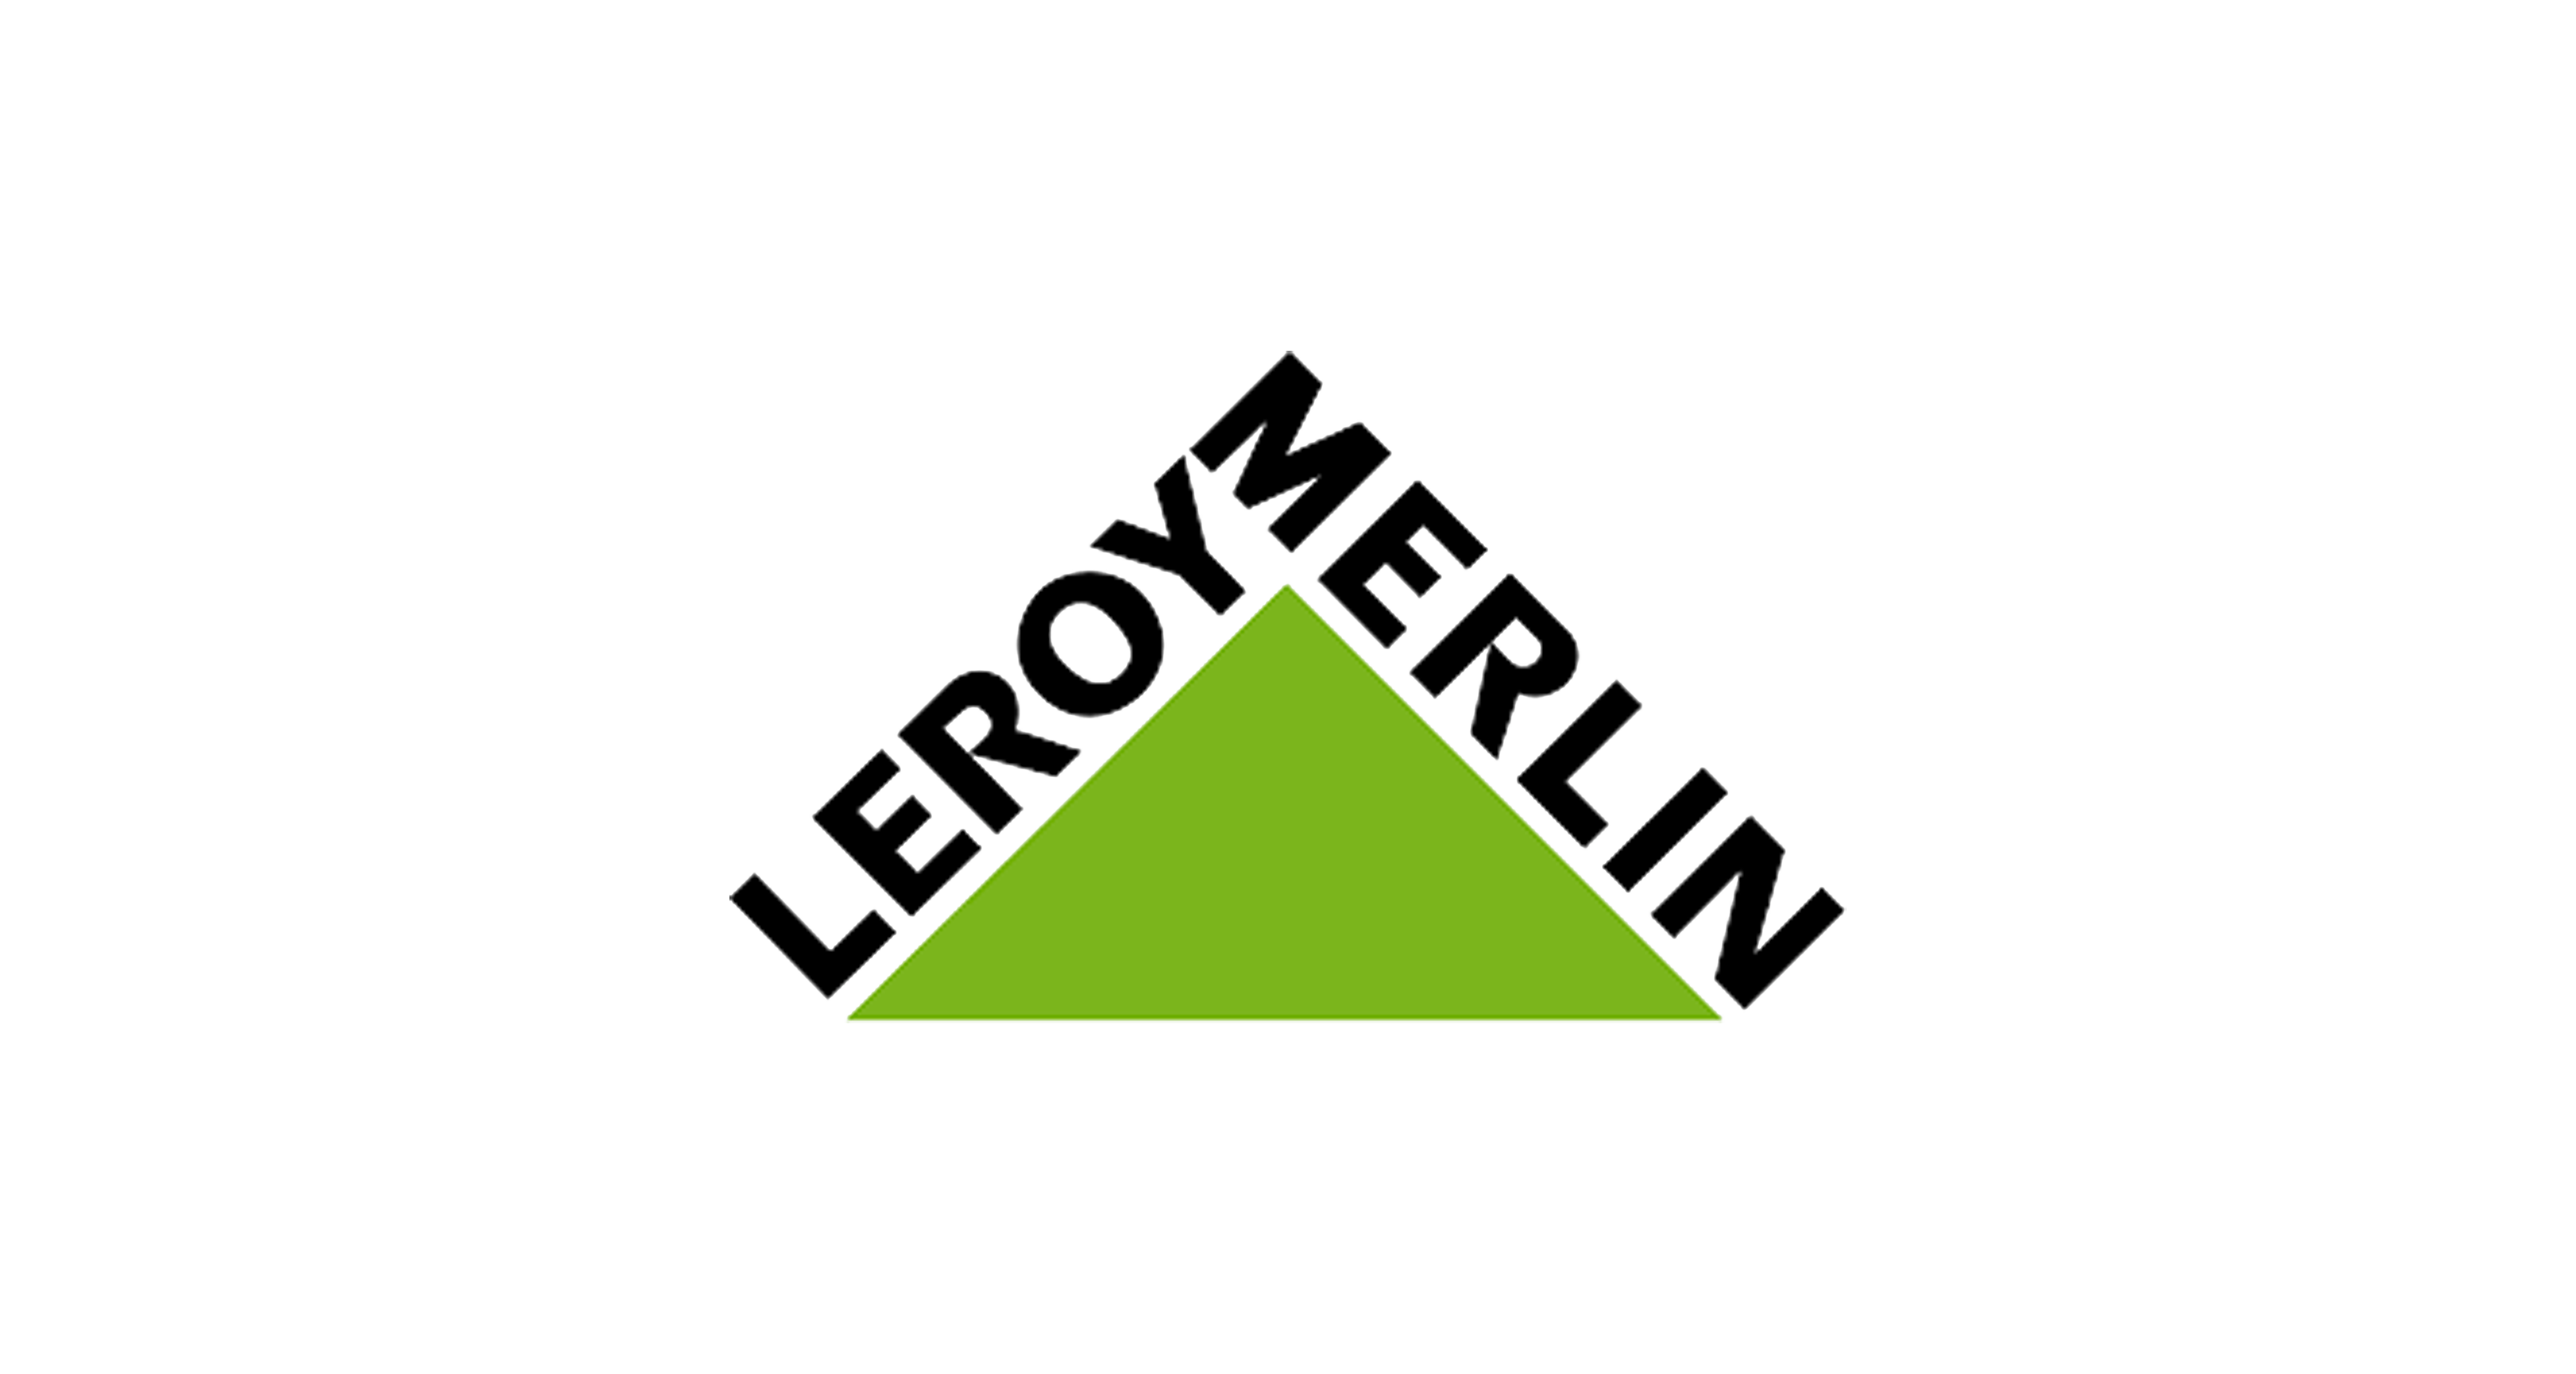 Logo de Leroy Merlin